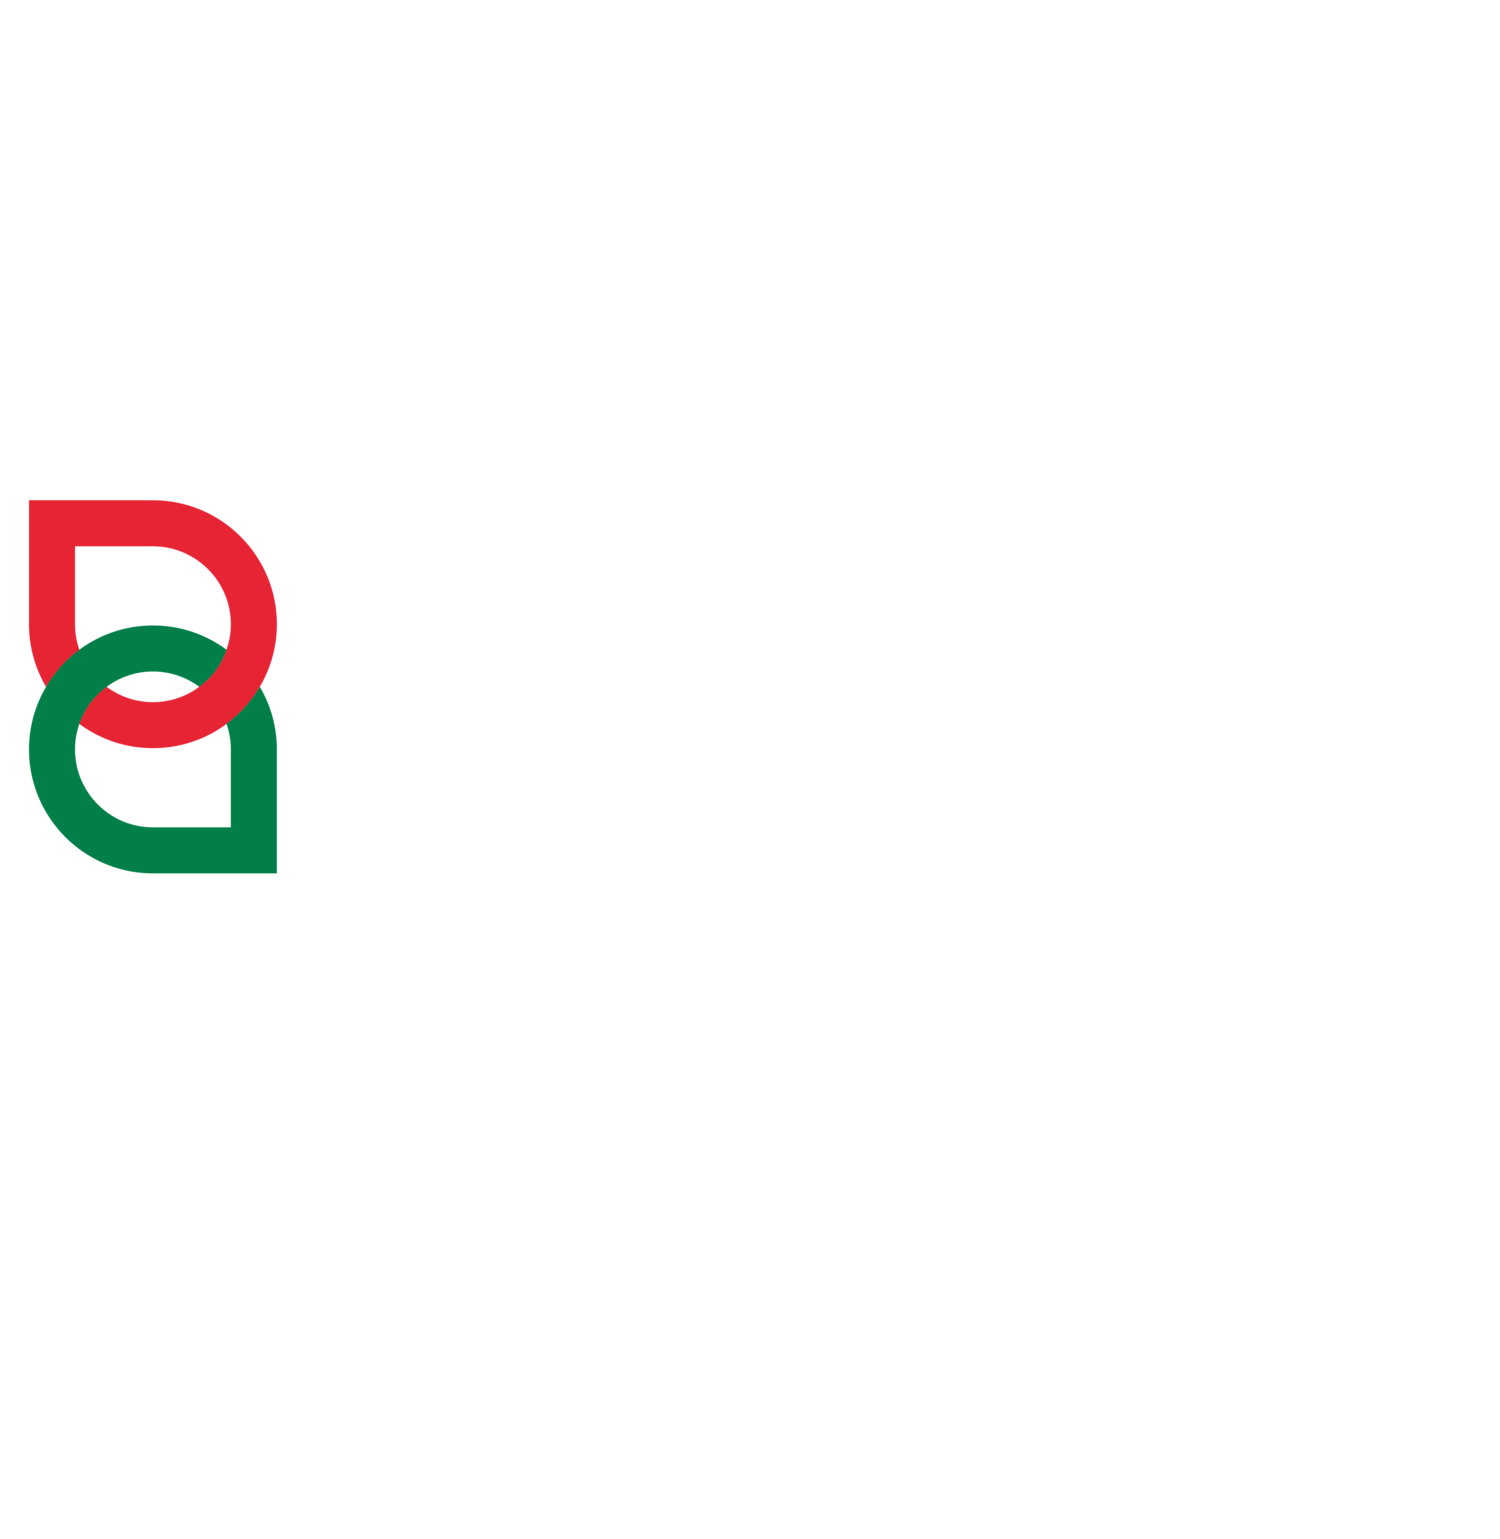 Bethel Atlanta Africa